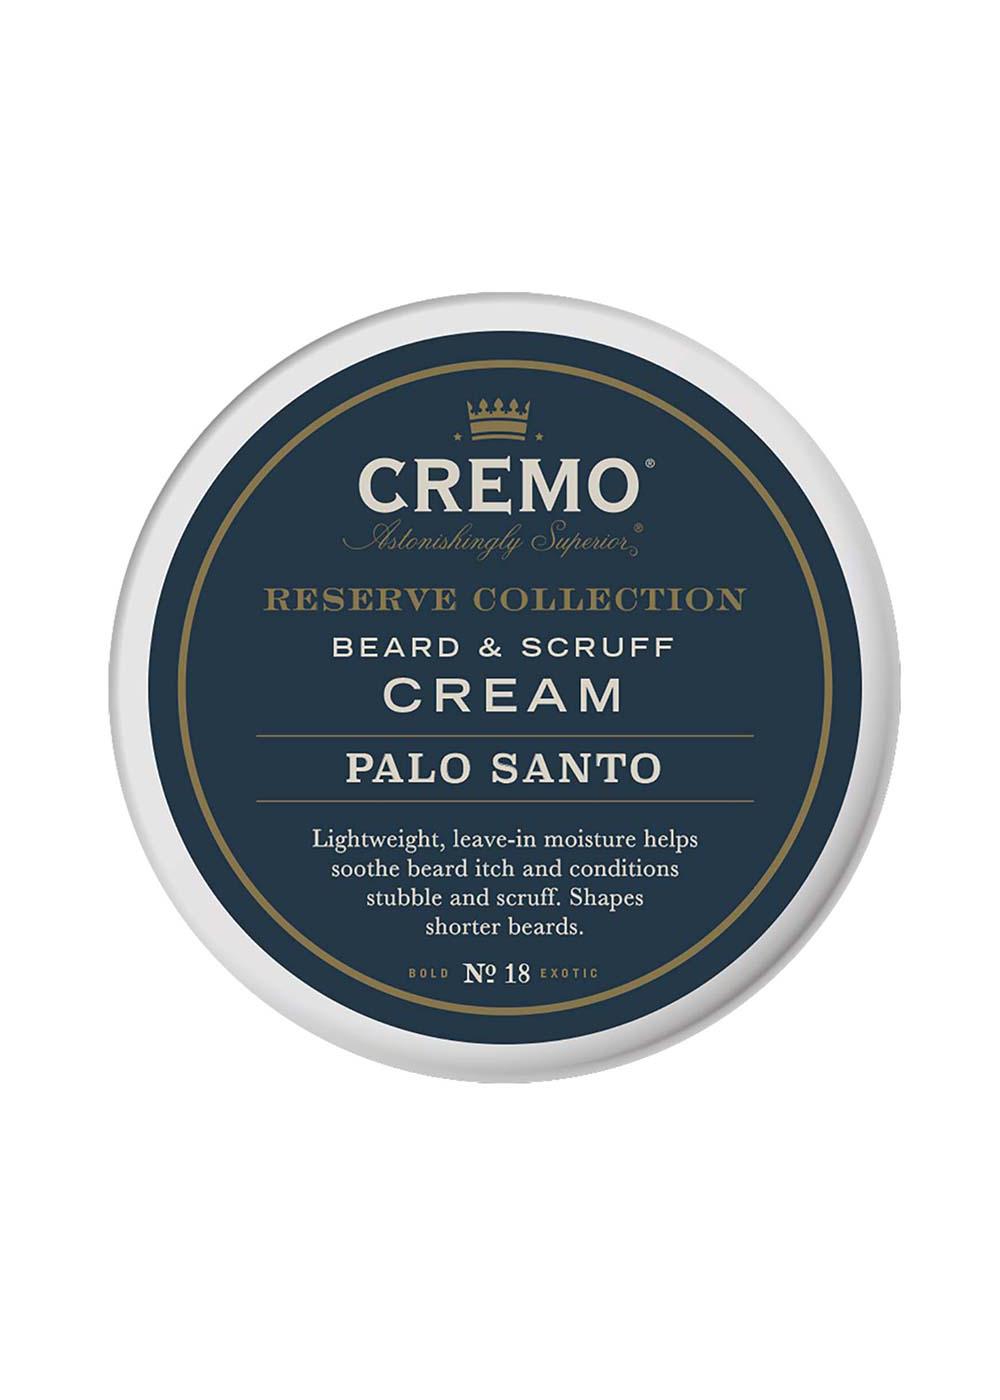 Cremo Reserve Collection Beard & Scruff Cream - Palo Santo; image 1 of 3